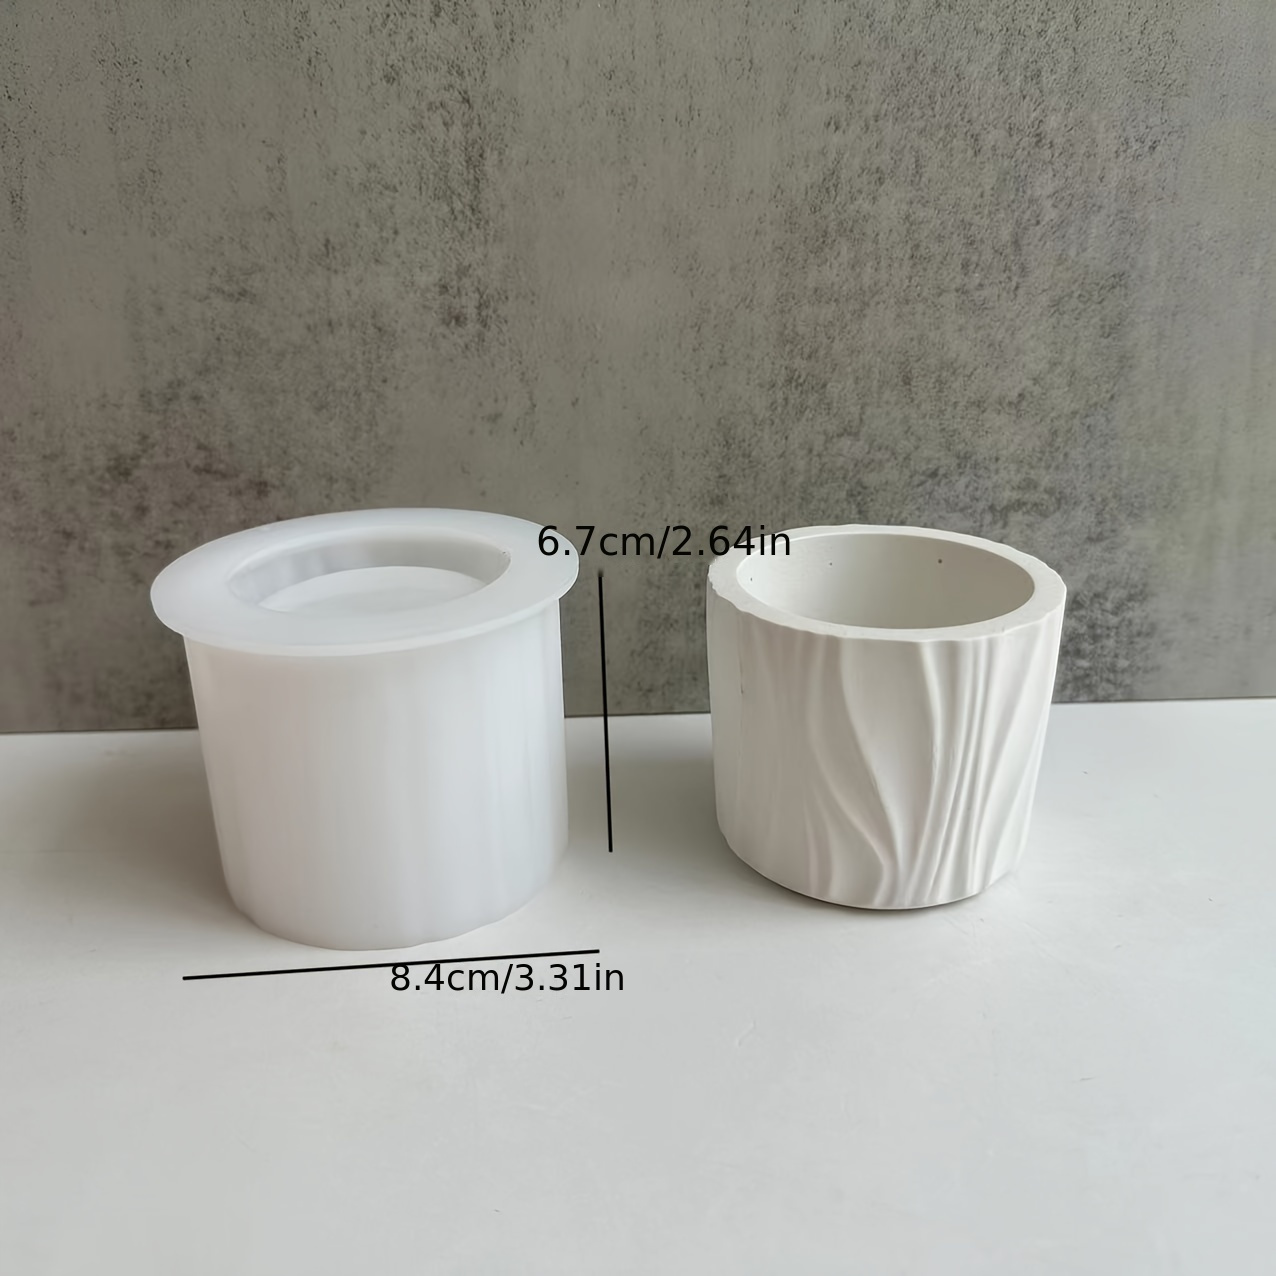 DIYBravo diybravo resin mould lotus bowl mold candle holder mold flower pot  mold silicone uv epoxy resin casting mold for diy flower p